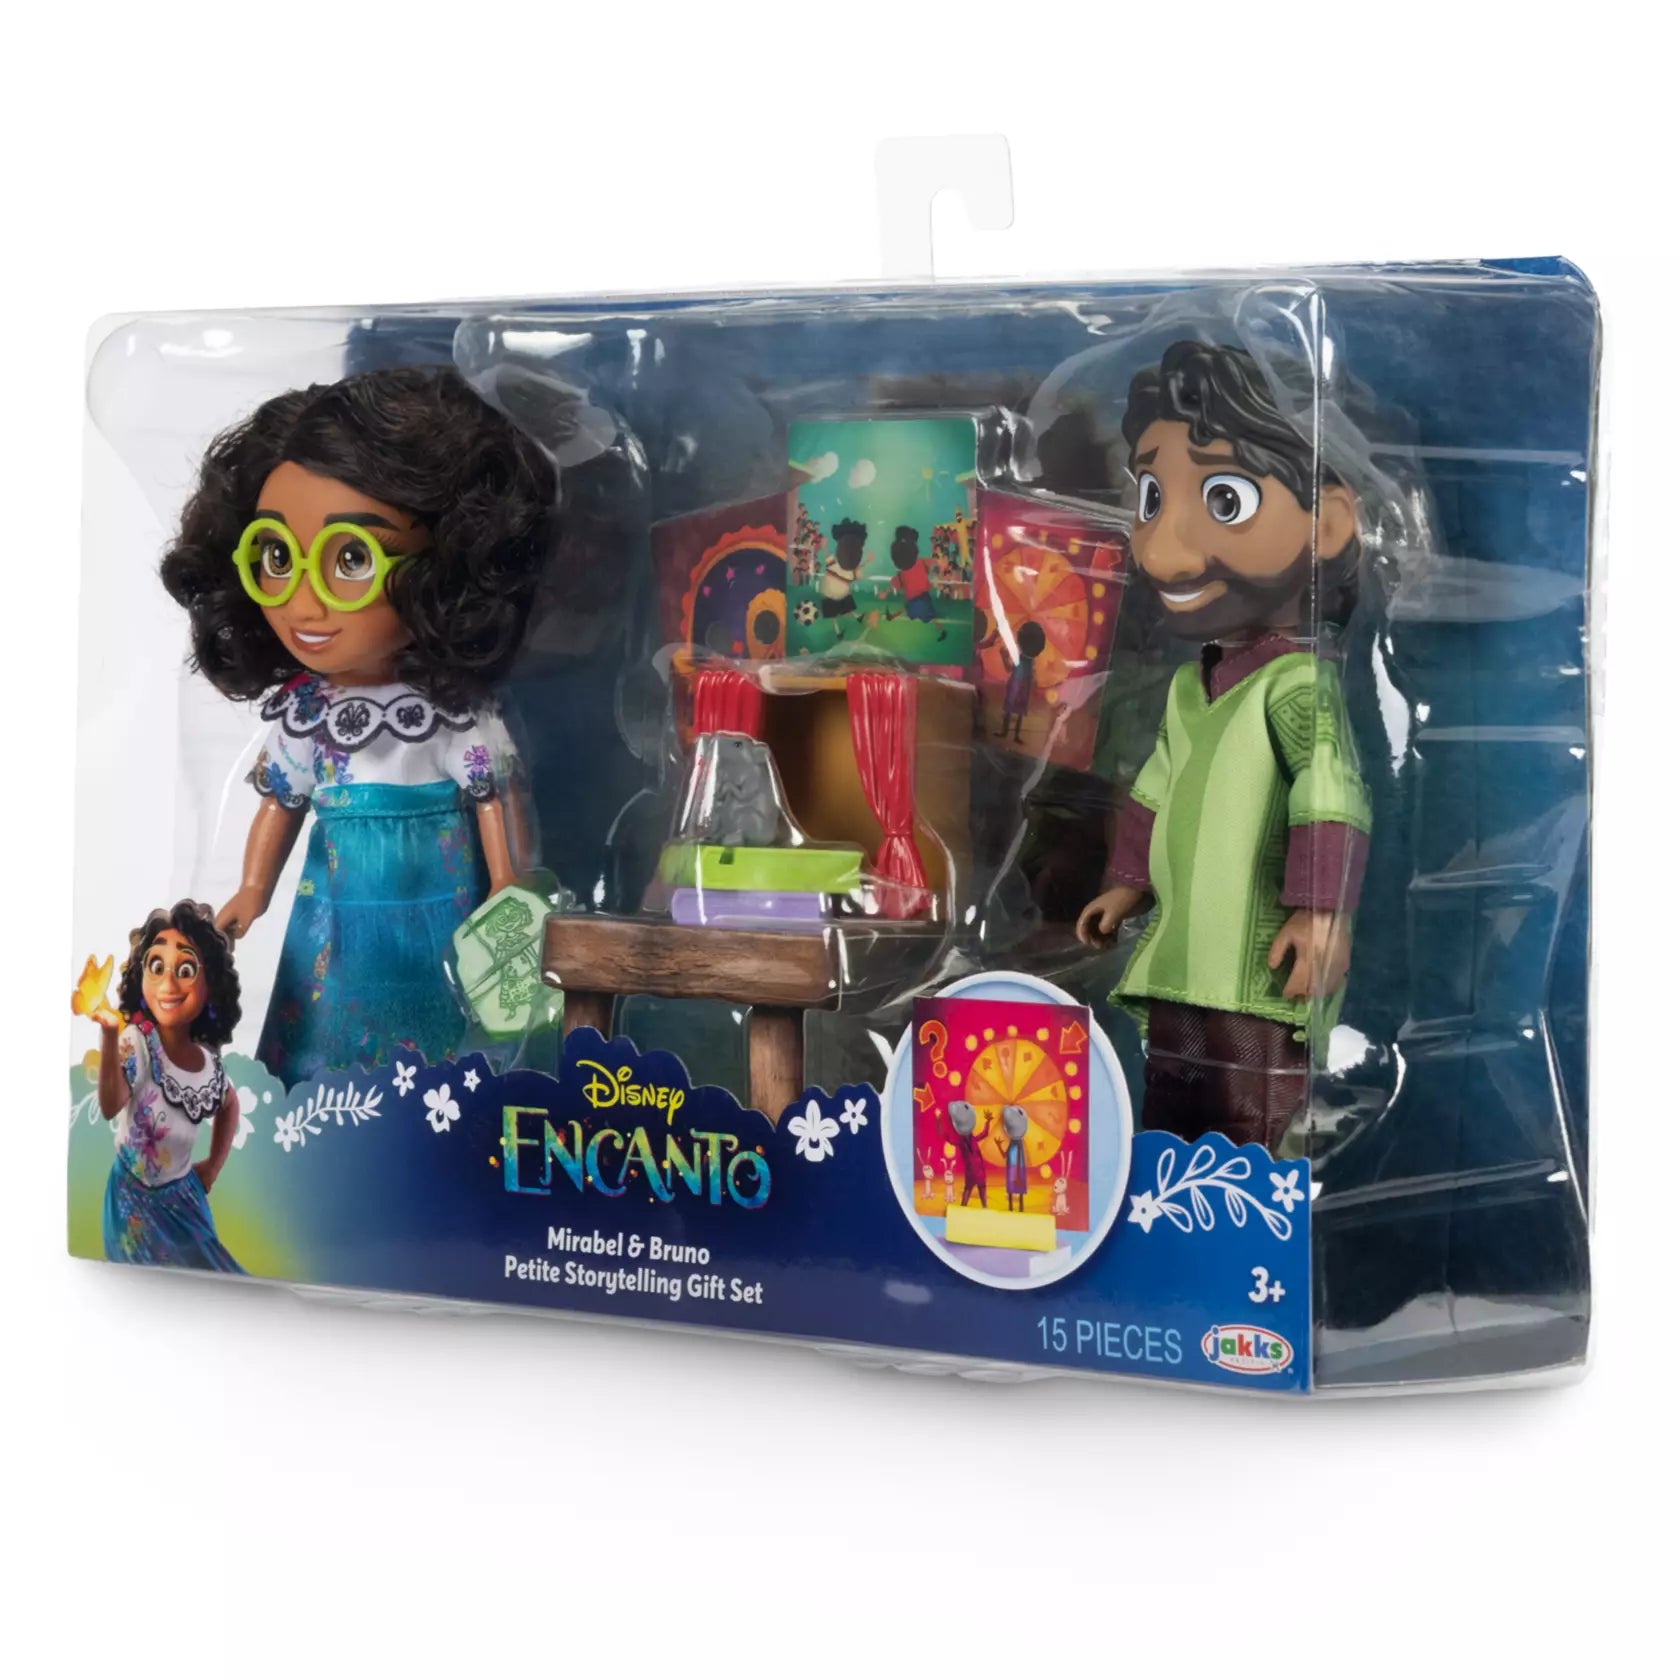 Disney Mirabel & Bruno Petite Storytelling Gift Set – Encanto - BumbleToys - 2-4 Years, Boys, Disney, Encanto, Girls, OXE, Pre-Order